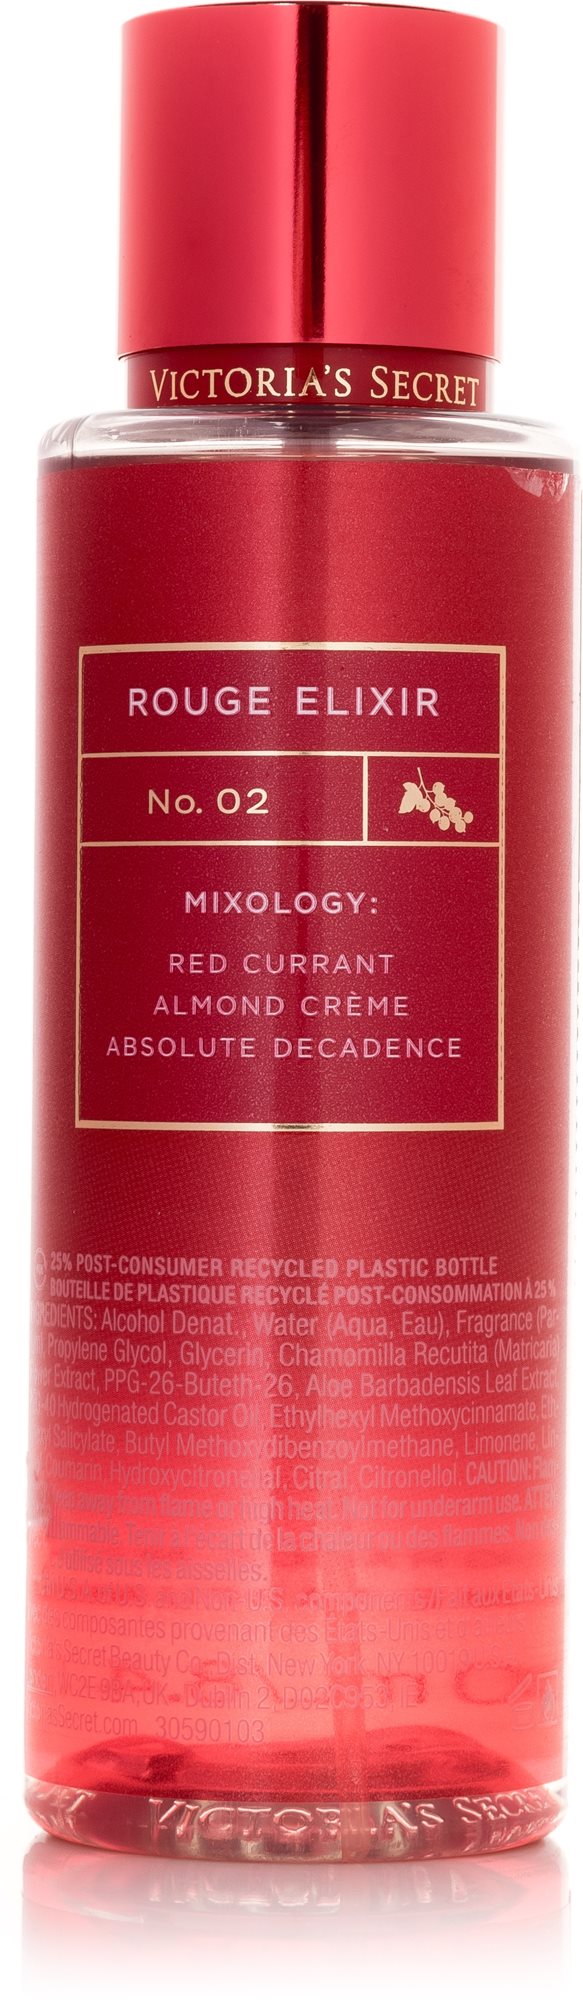 VICTORIA'S SECRET Rouge Elixir No. 2, 250 ml